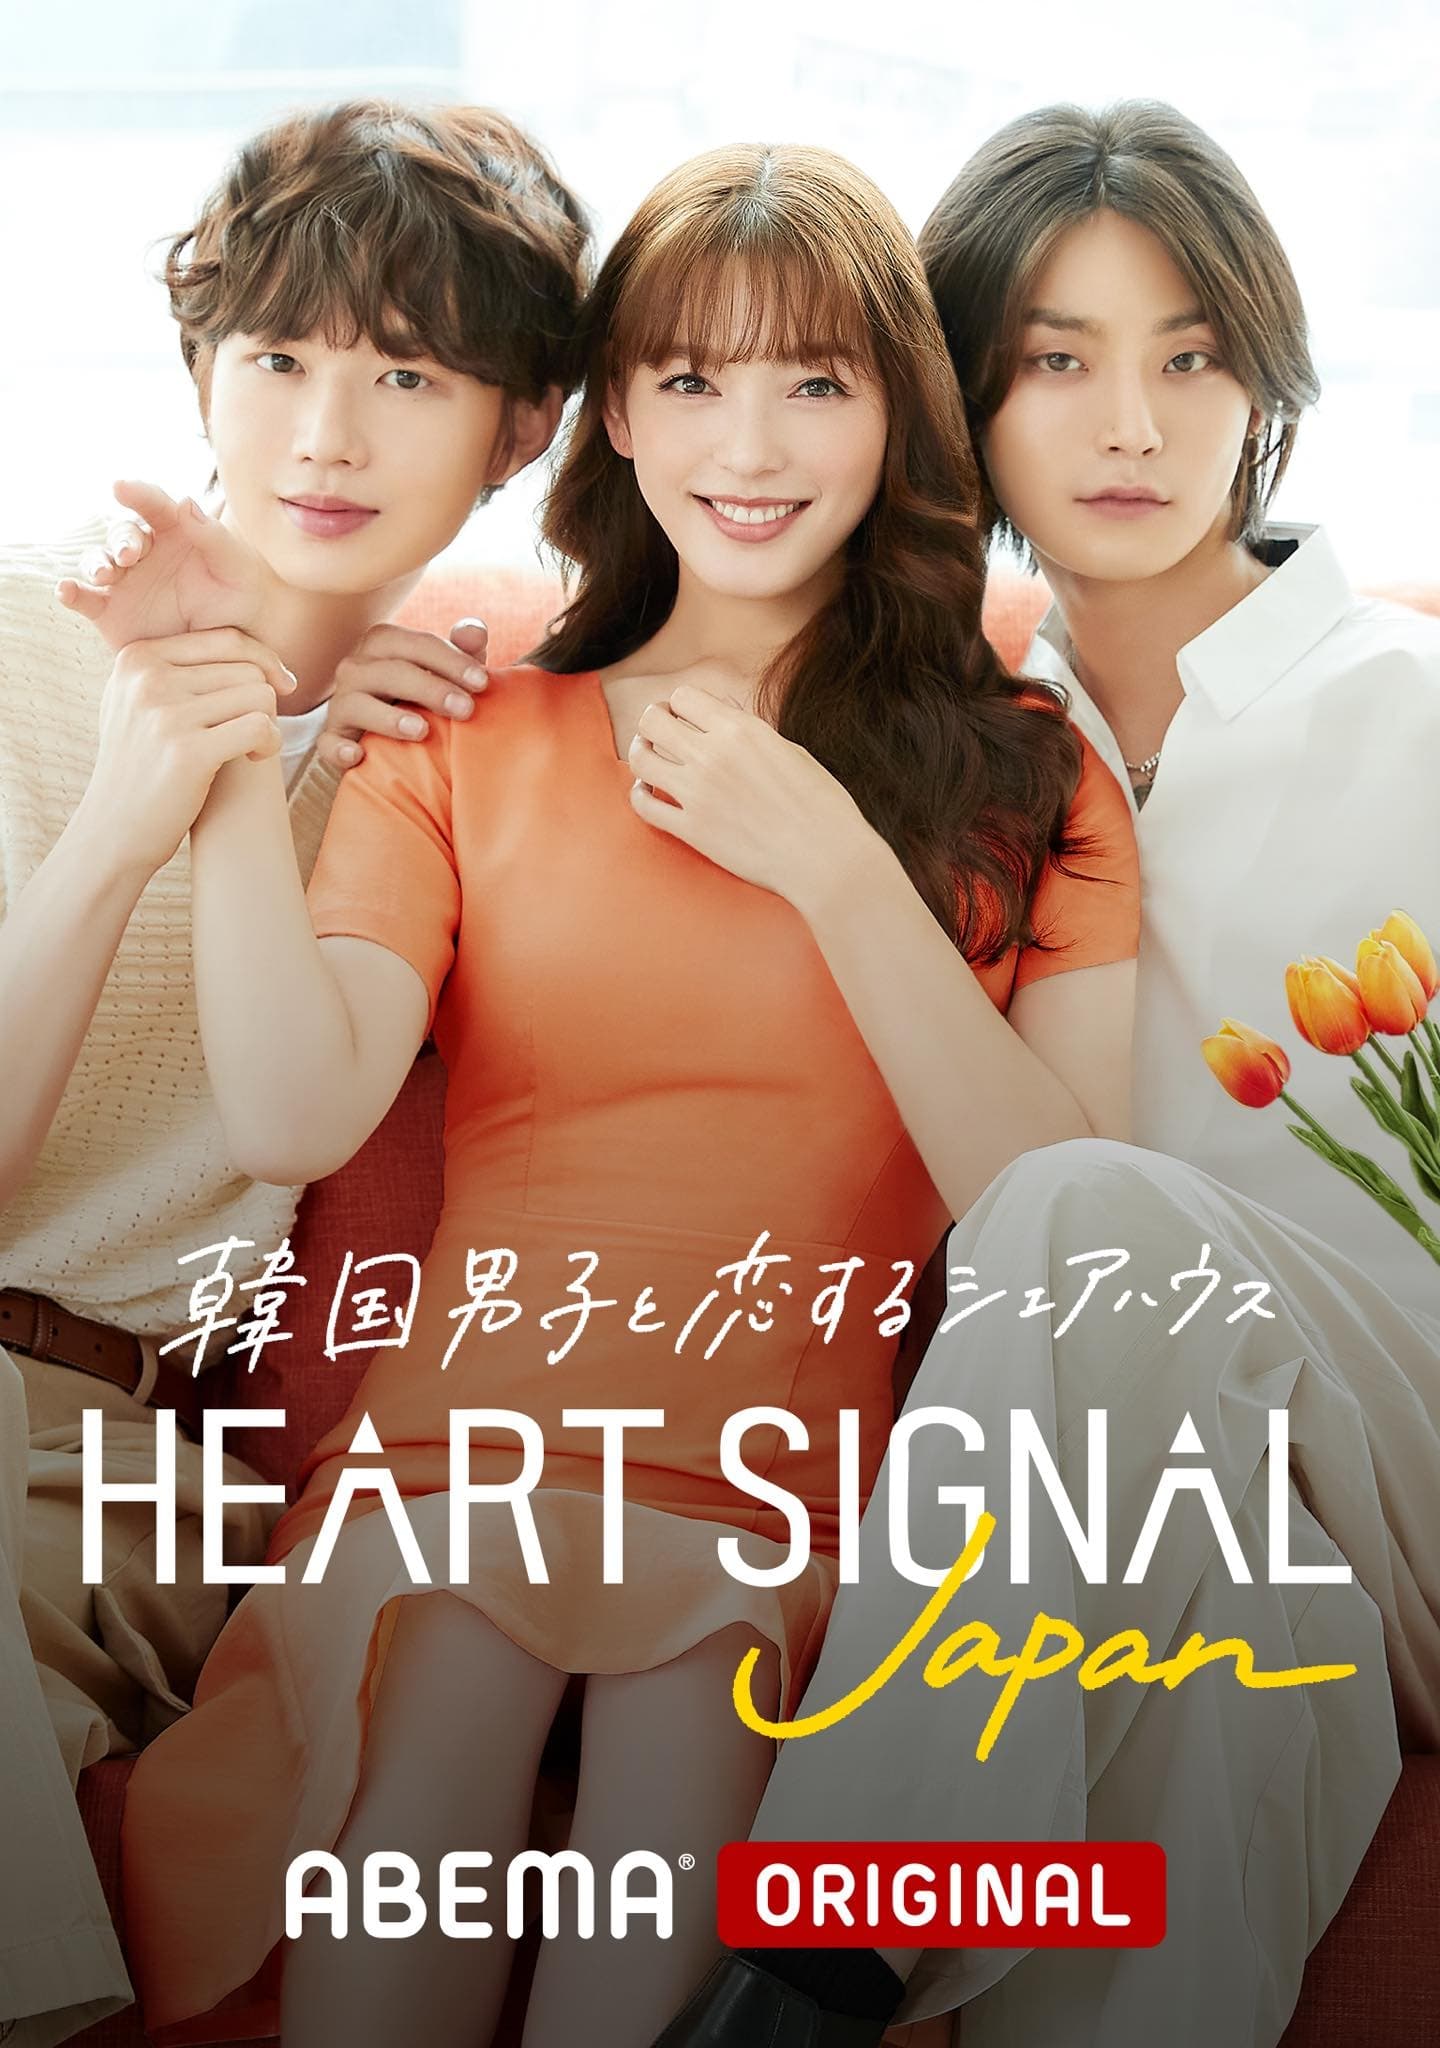 TV ratings for Heart Signal Japan in Japan. AbemaTV TV series